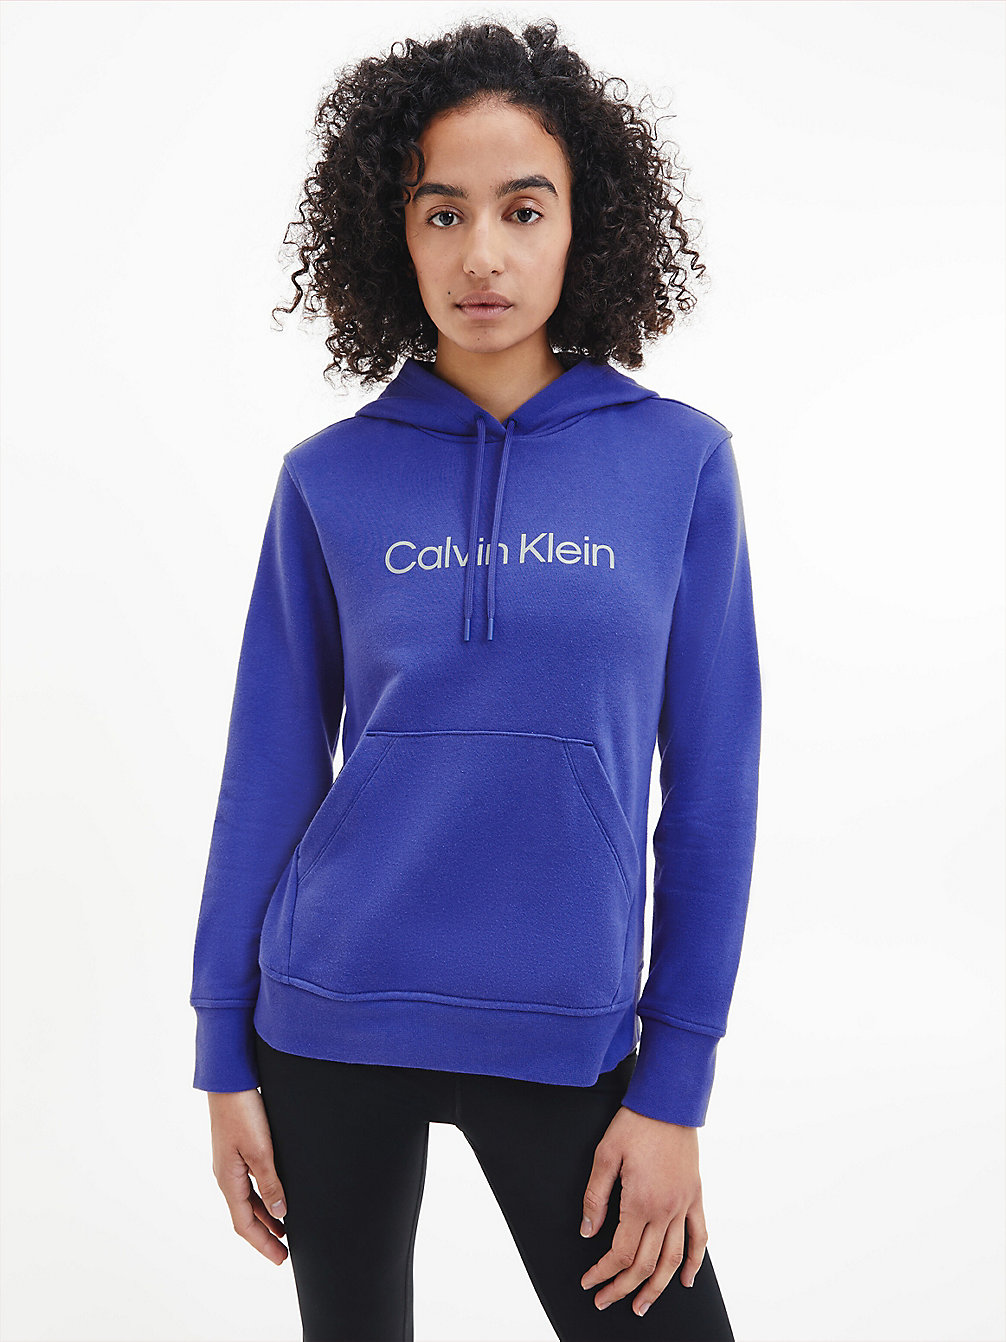 CLEMATIS BLUE > Bluza Z Kapturem Z Logo Z Bawełny Frotte > undefined Kobiety - Calvin Klein